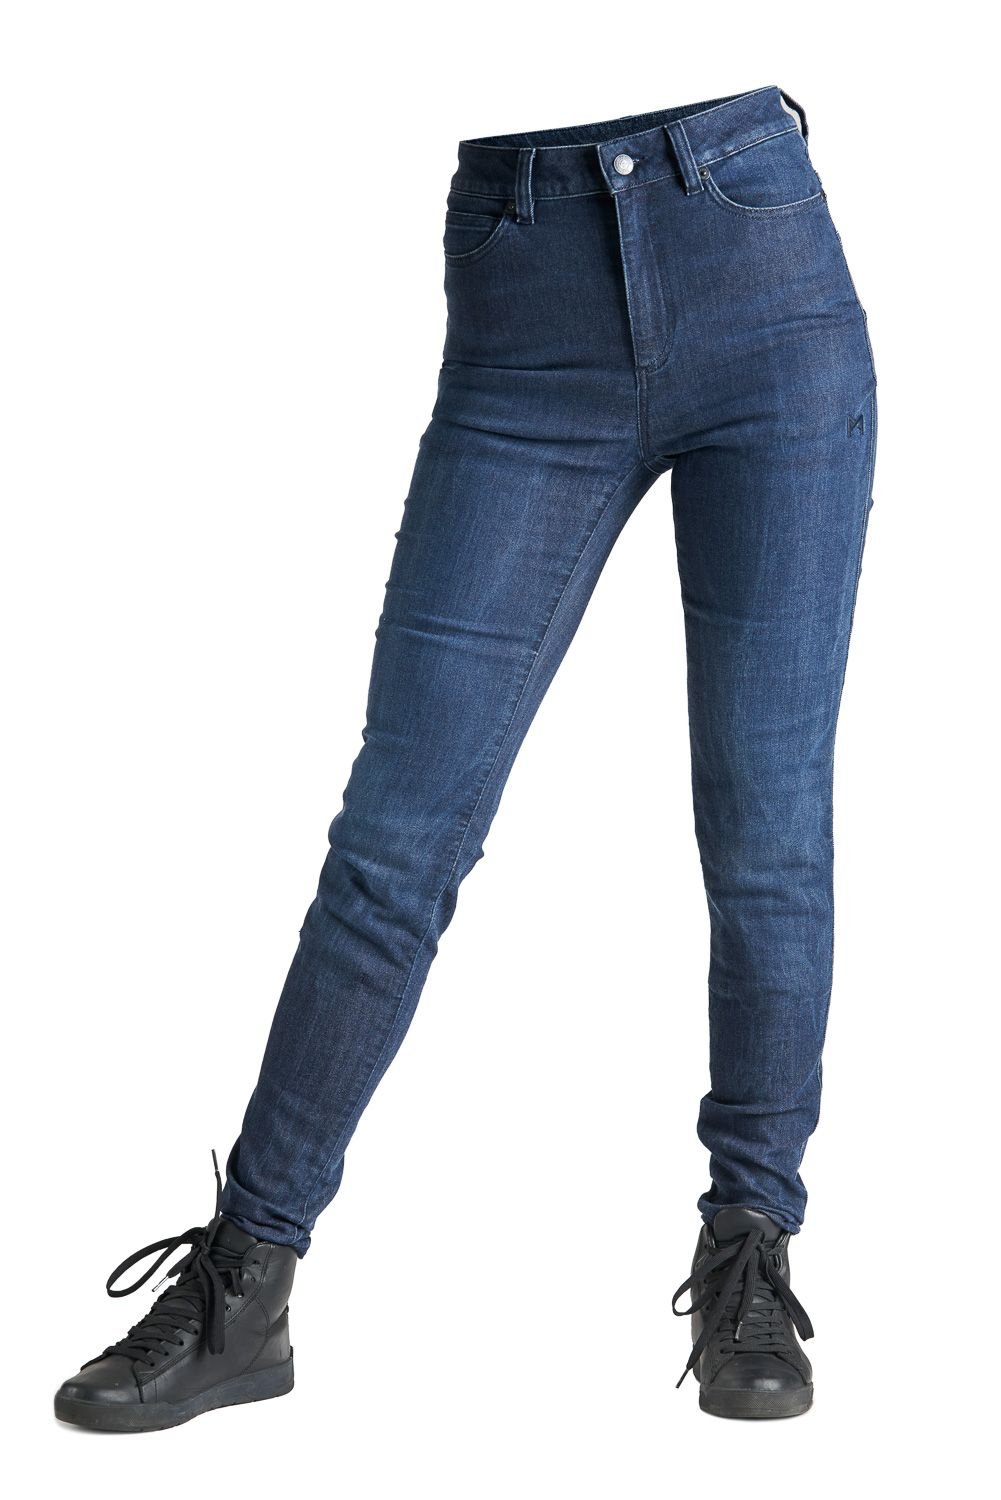 Image of Pando Moto Kusari Cor 02 Women Motorcycle Jeans Skinny-Fit Cordura Size W28/L32 ID 7851049504980